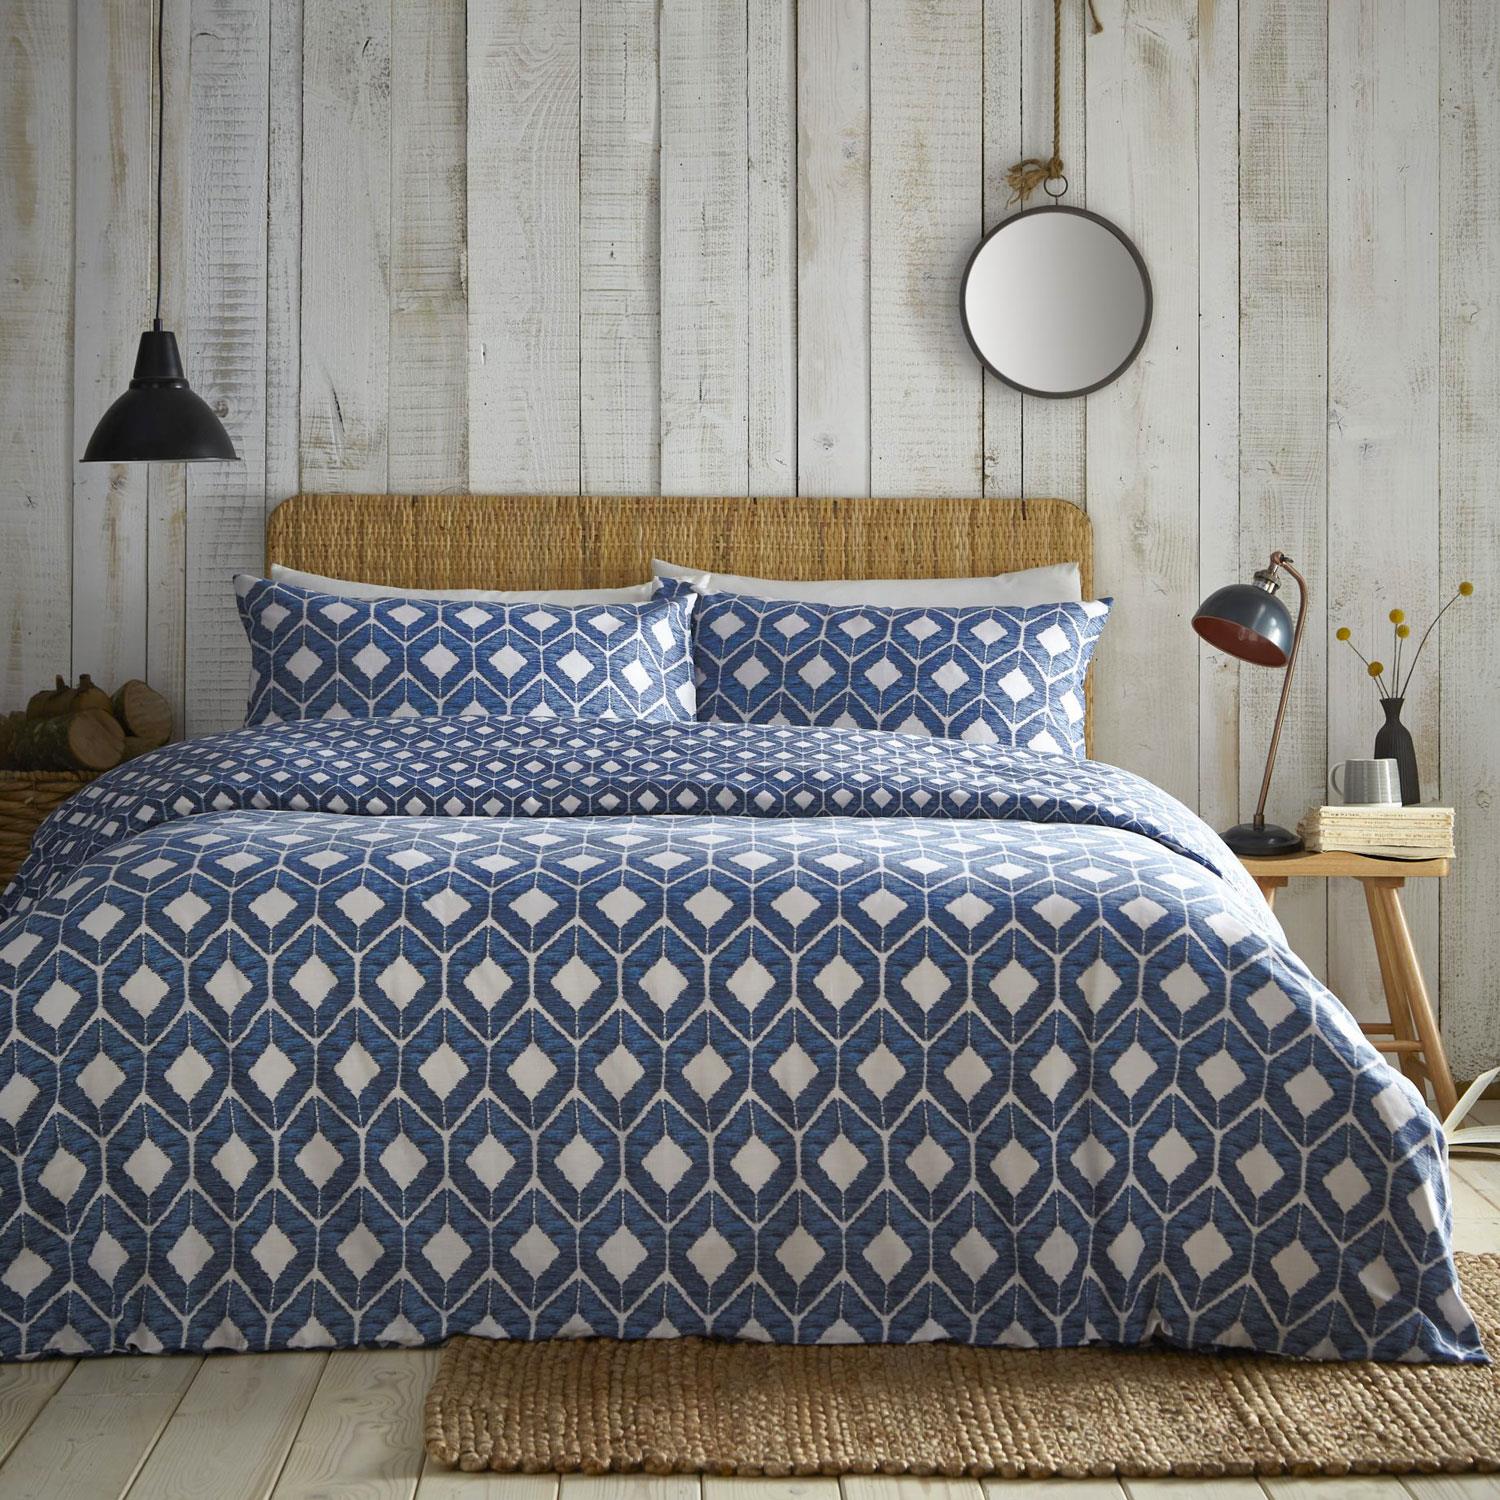 Duvet set blue moroccan geometric print quilt cover pillow cases bedding